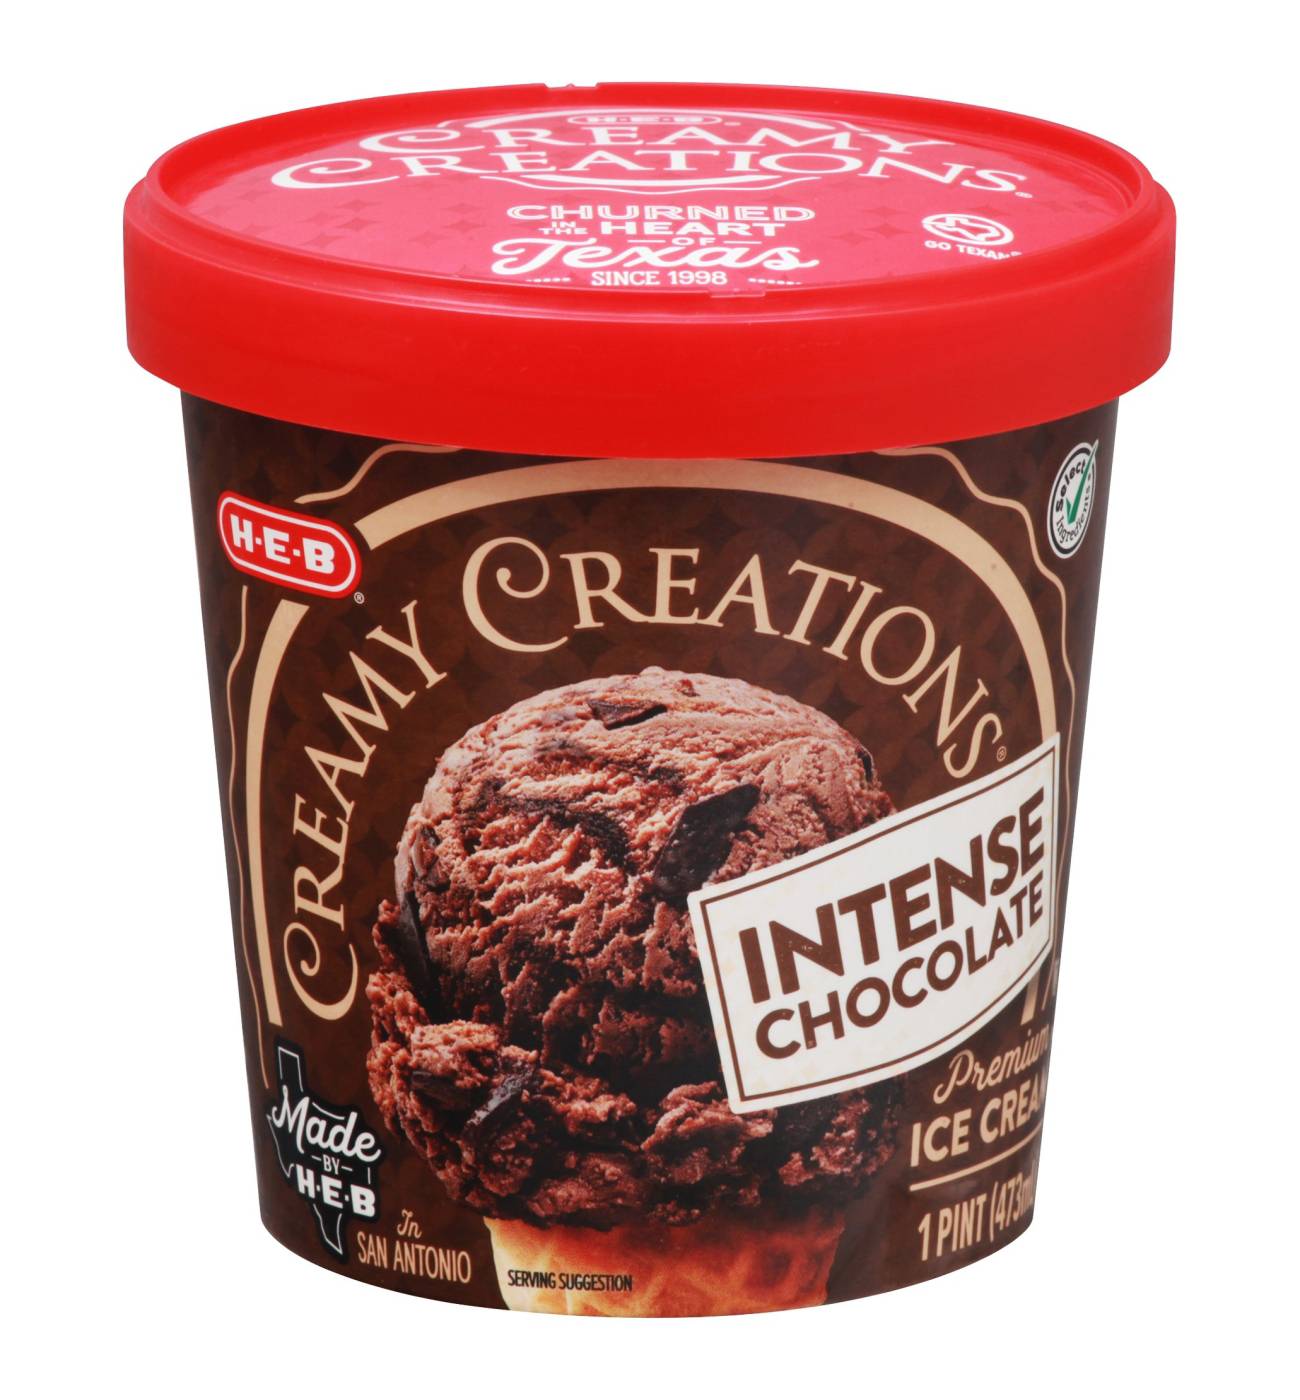 H-E-B Creamy Creations Intense Chocolate Ice Cream; image 1 of 2